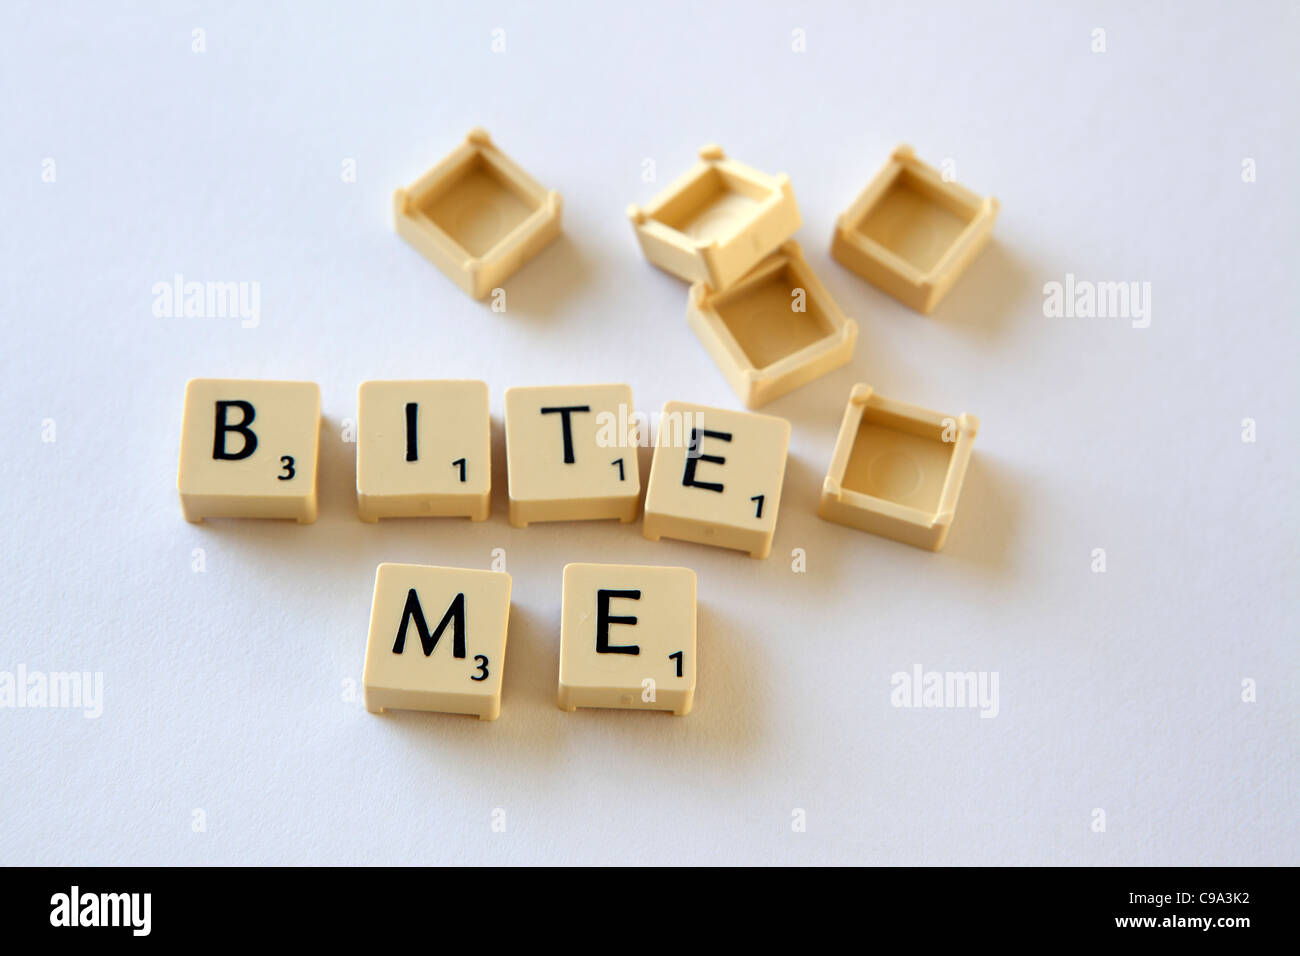 Scrabble tiles / squares spell out 'BITE ME' slogan, white background studio photograph Stock Photo